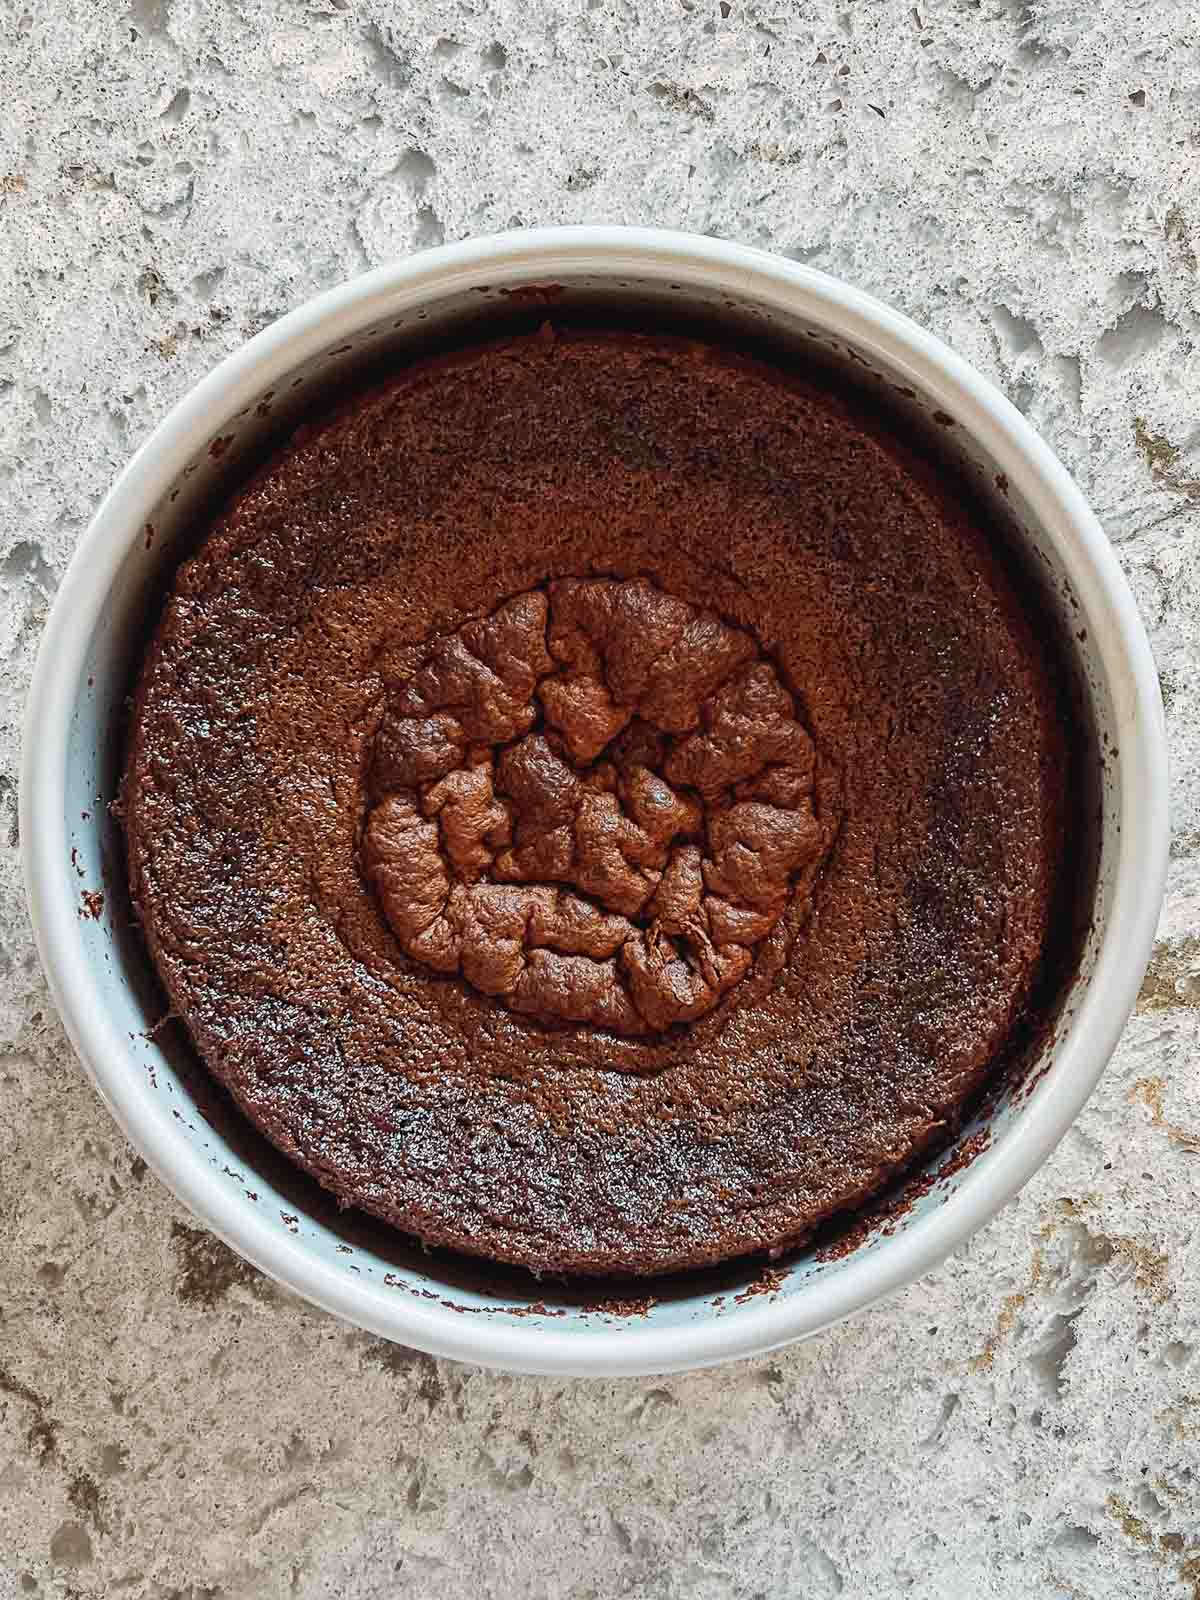 shrunken and shriveled chocolate cake in cake pan.